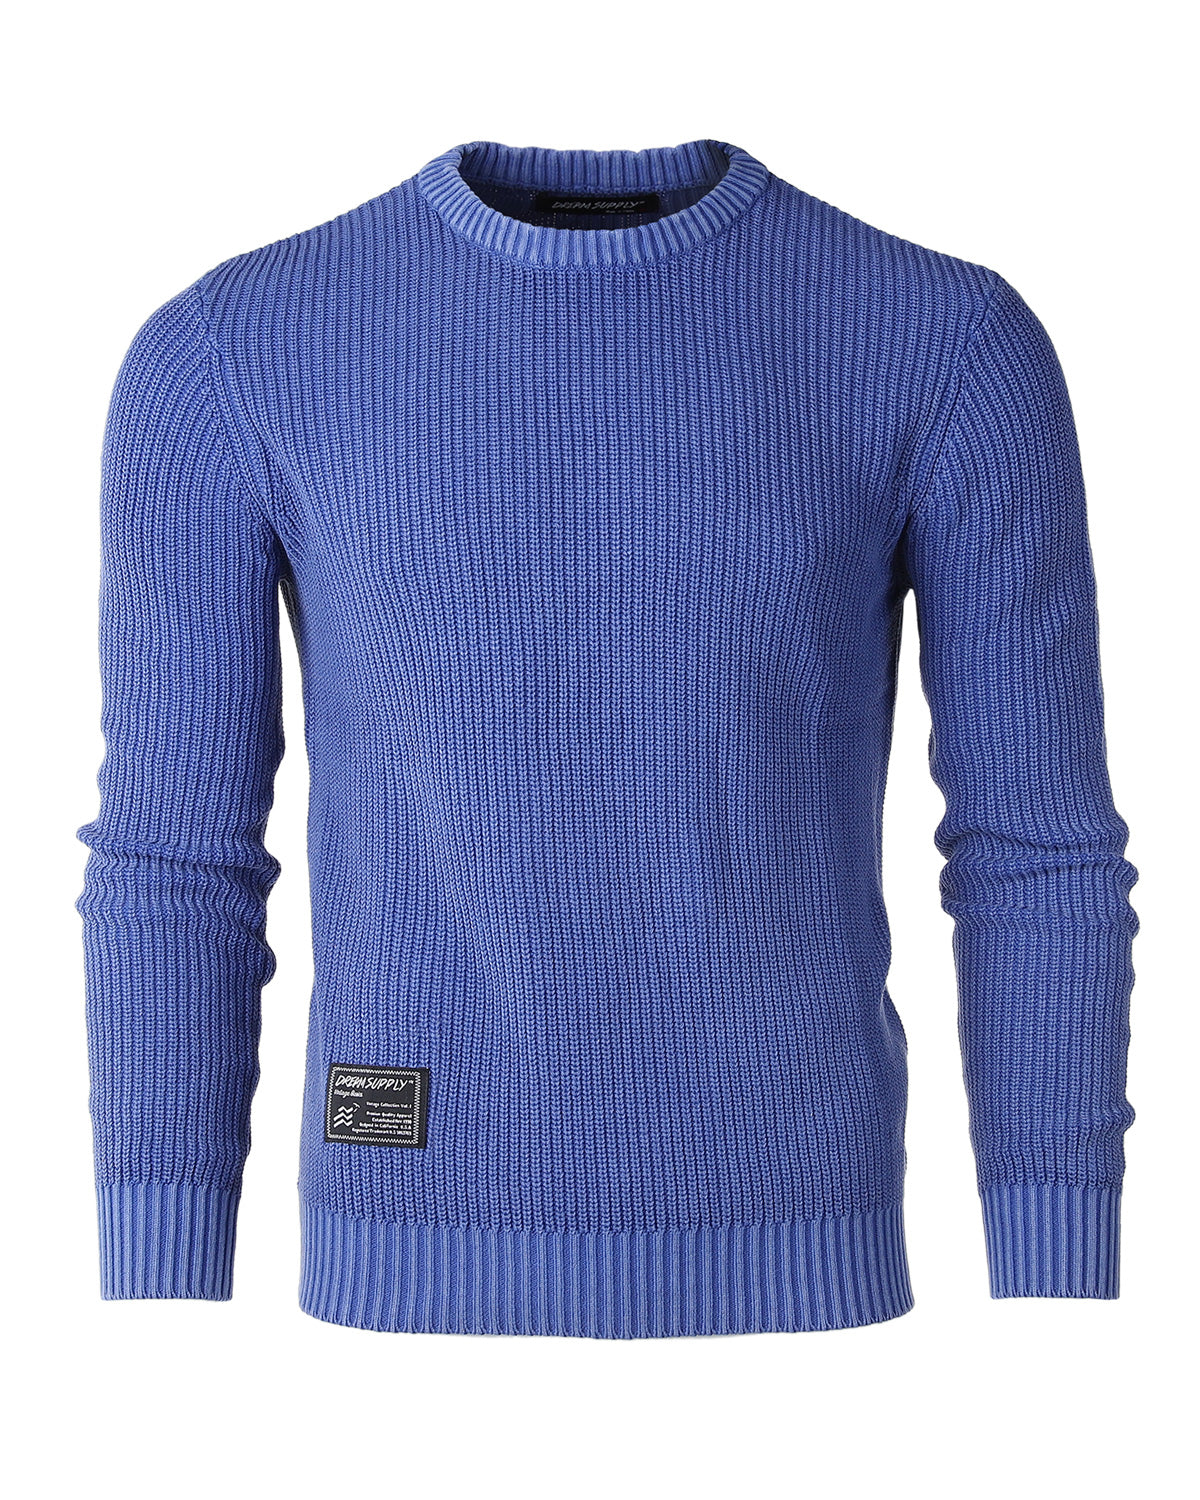 Men's Long Sleeve Stone Washed Vintage Crewneck Pullover Sweater Blue